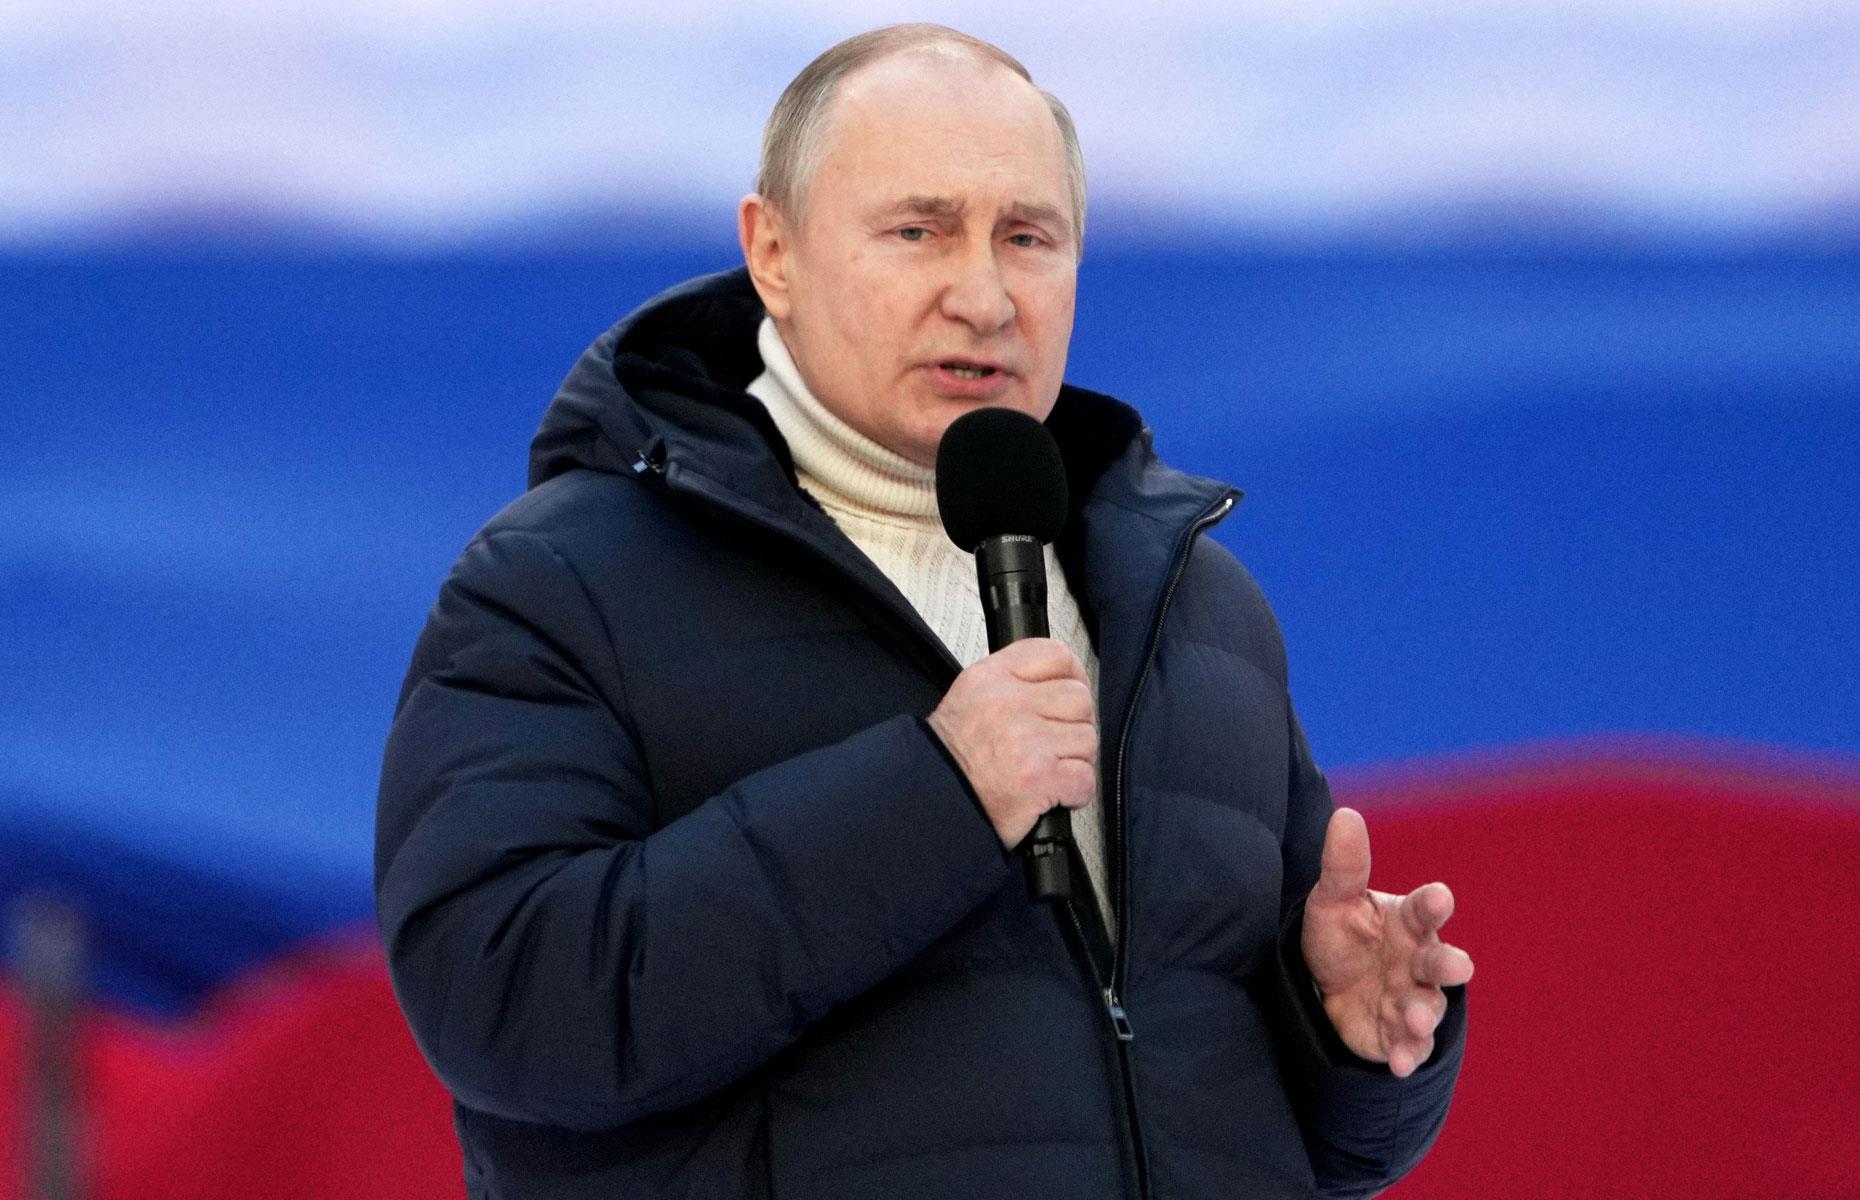 Putin's mega-pricey wardrobe 